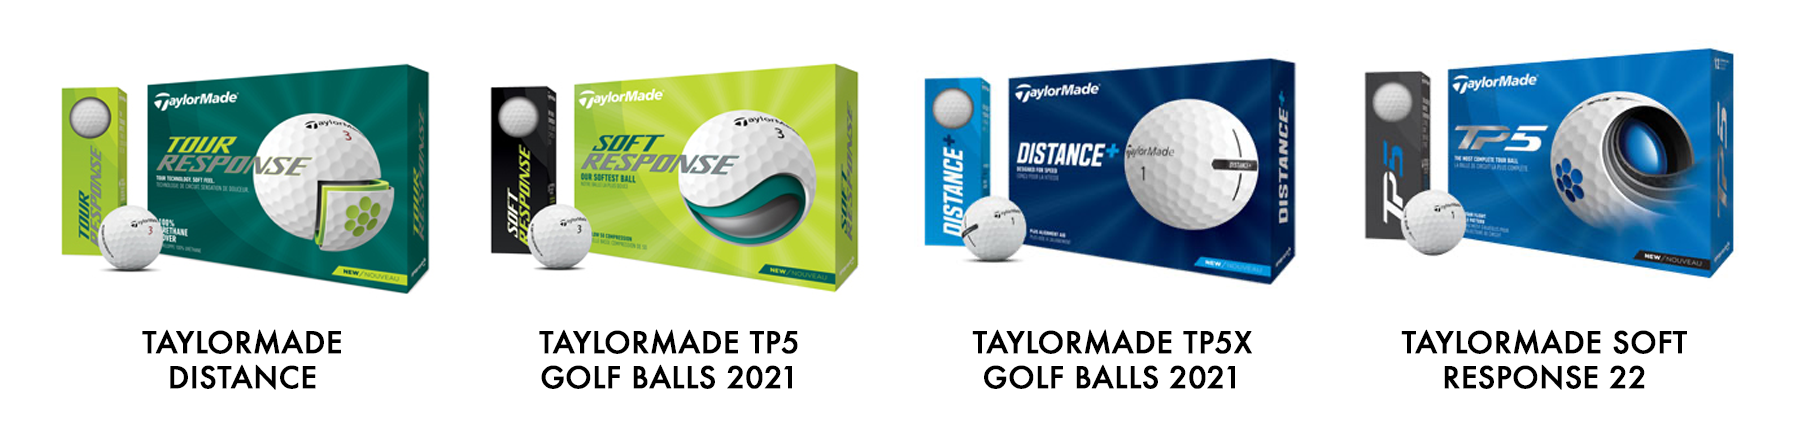 TaylorMade Golf balls Full